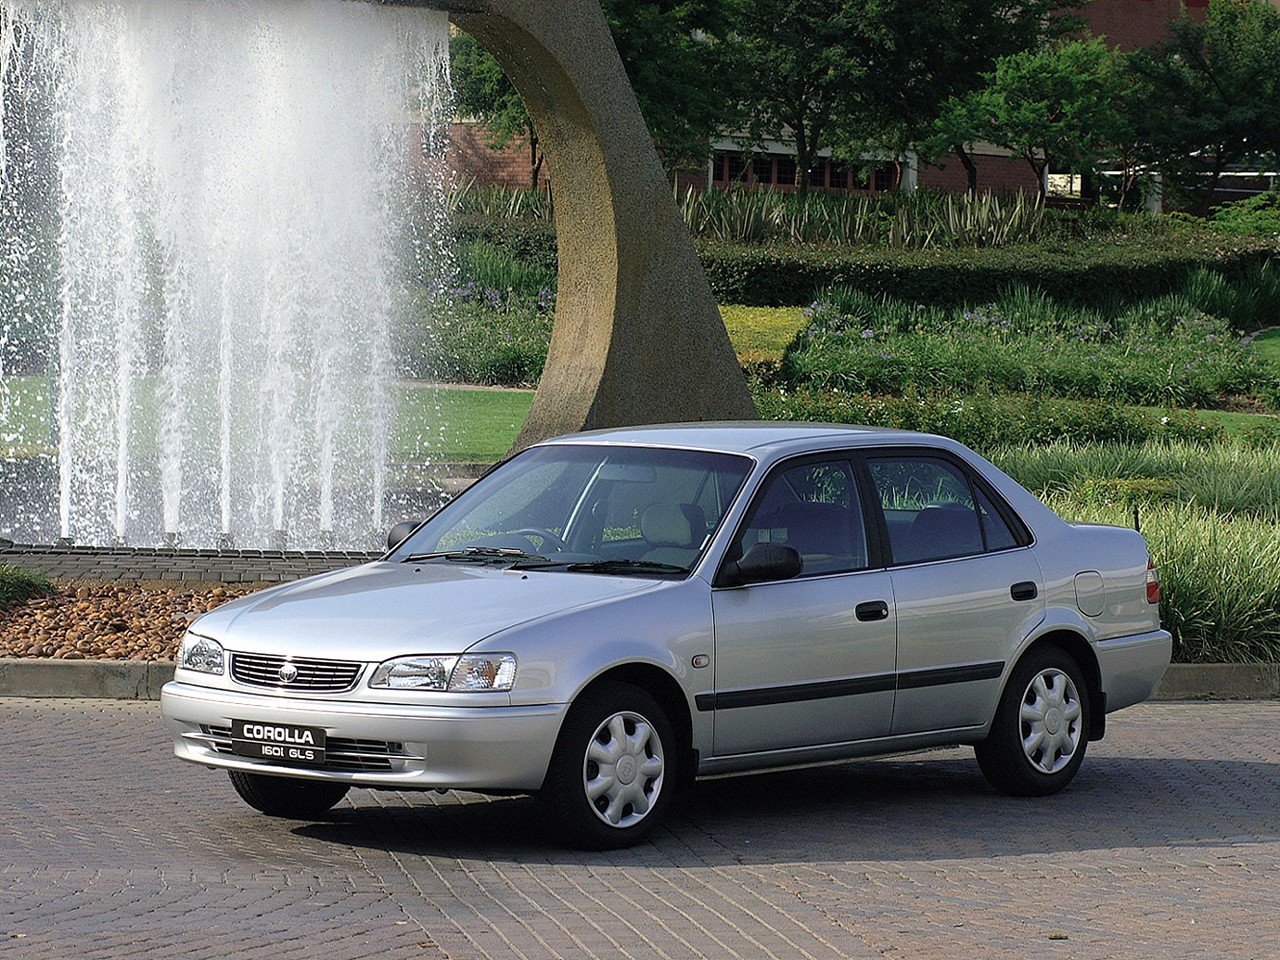 TOYOTA Corolla Sedan specs & photos - 1997, 1998, 1999, 2000 ...